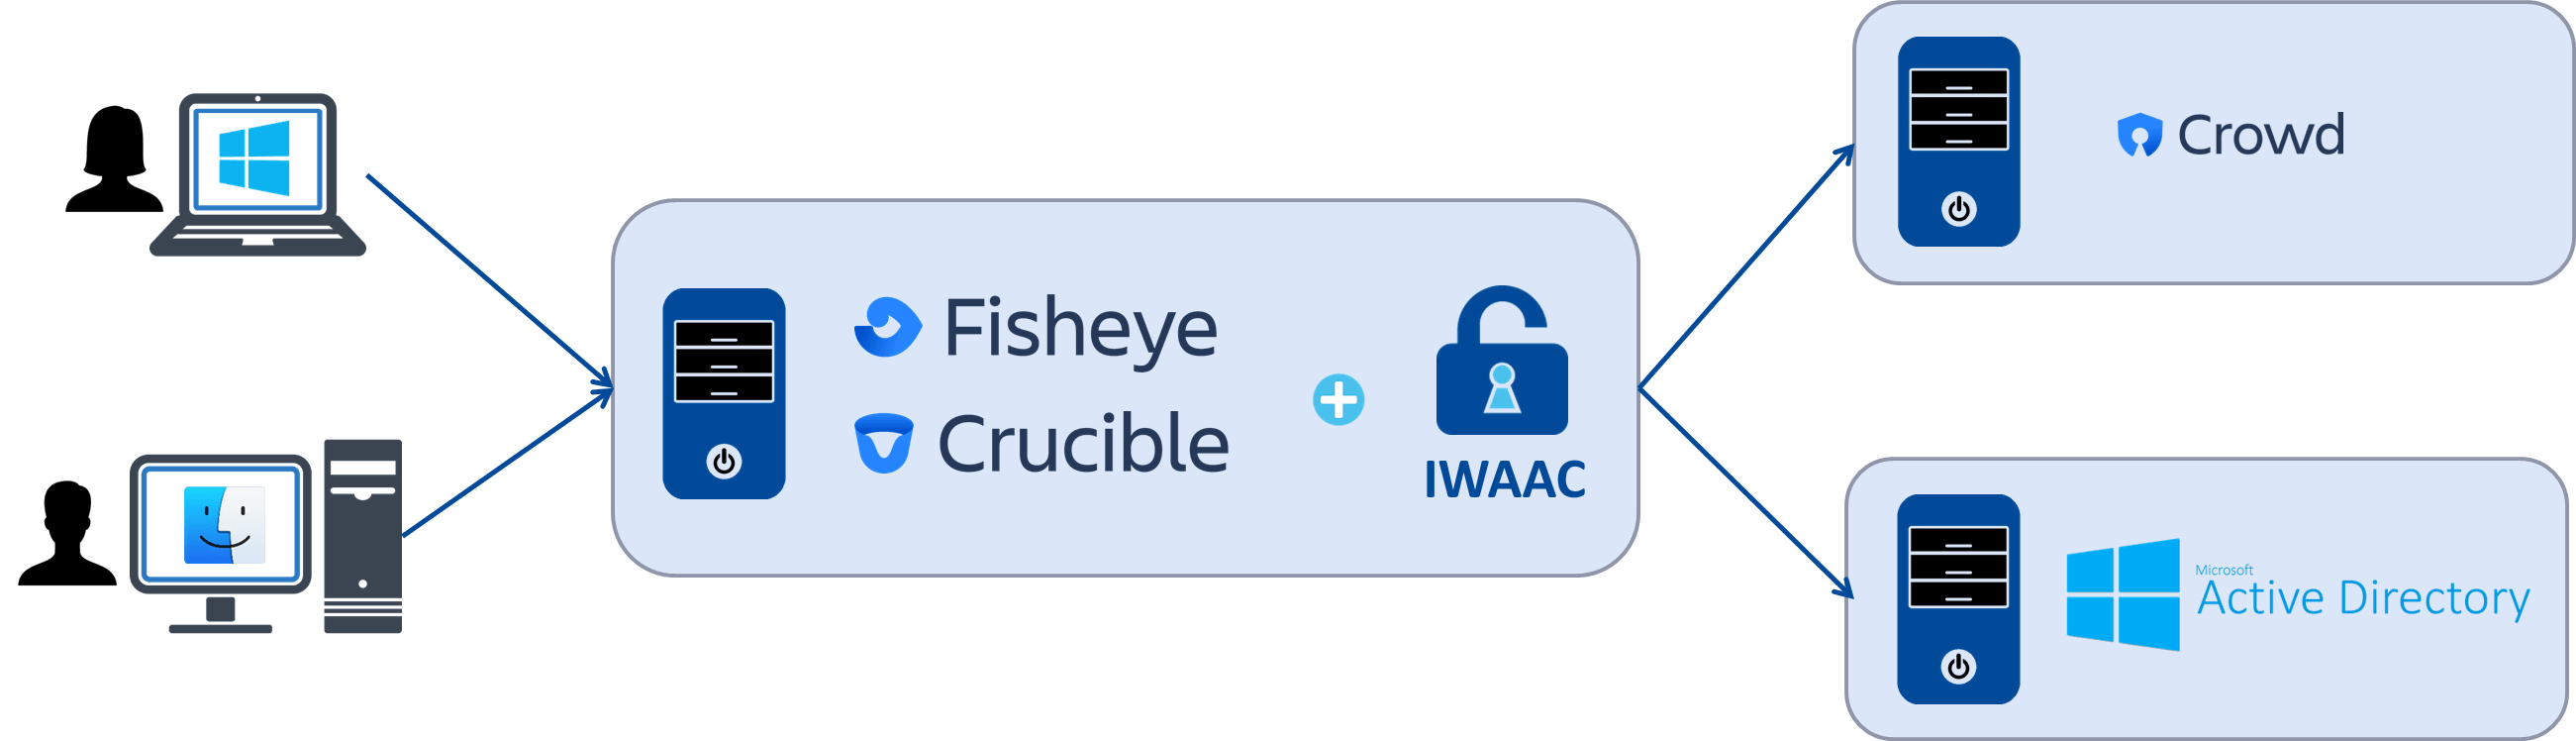 IWAAC for FishEye and Crucible Overview